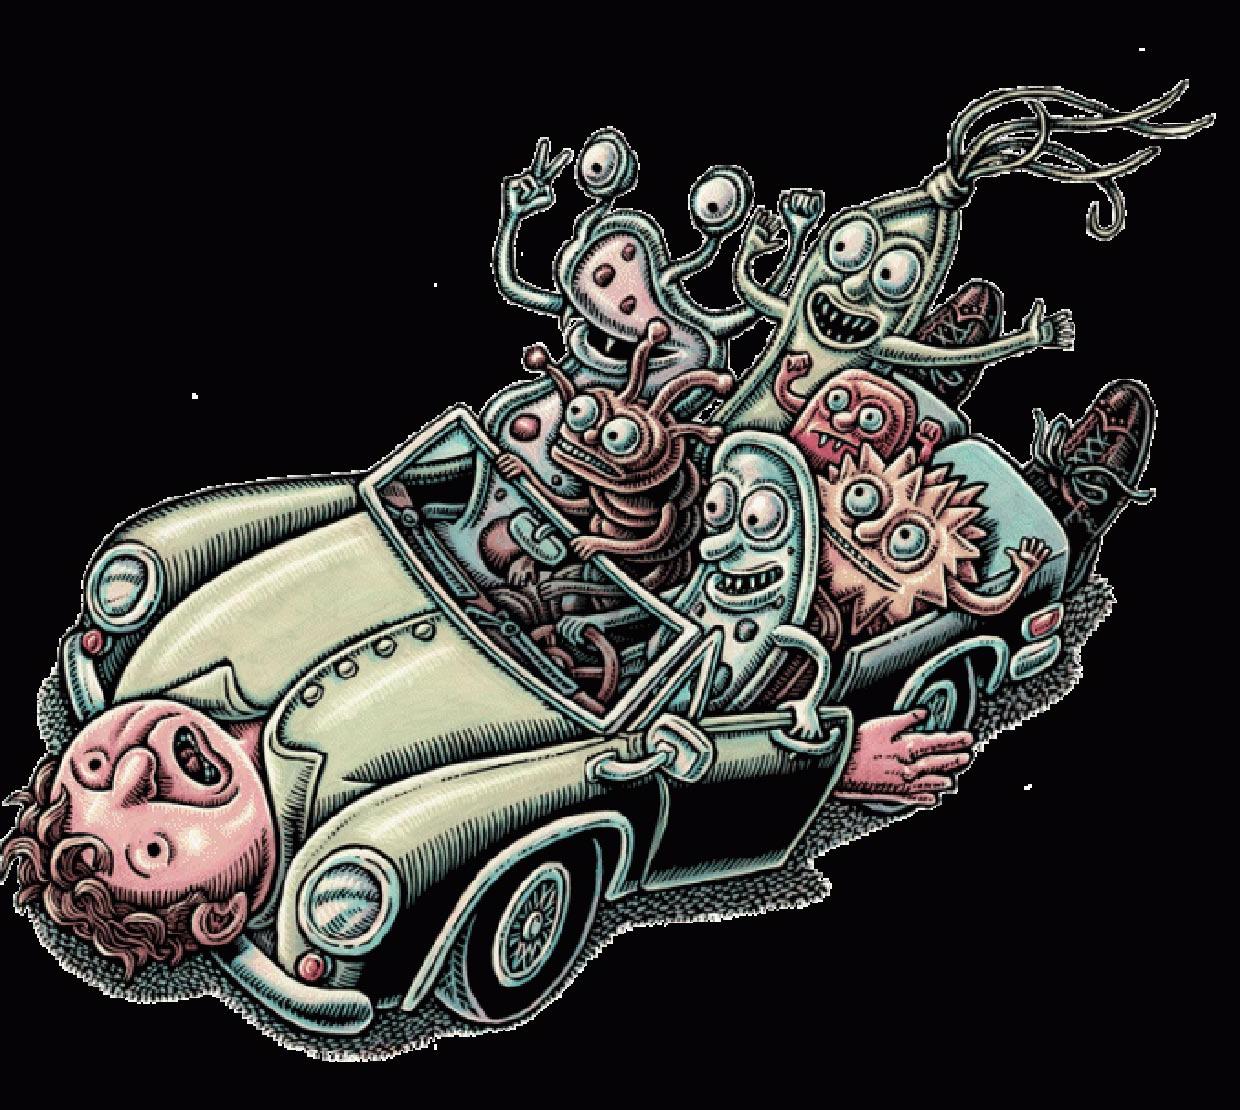 Lisa Haney painting of bacteria characters driving human car